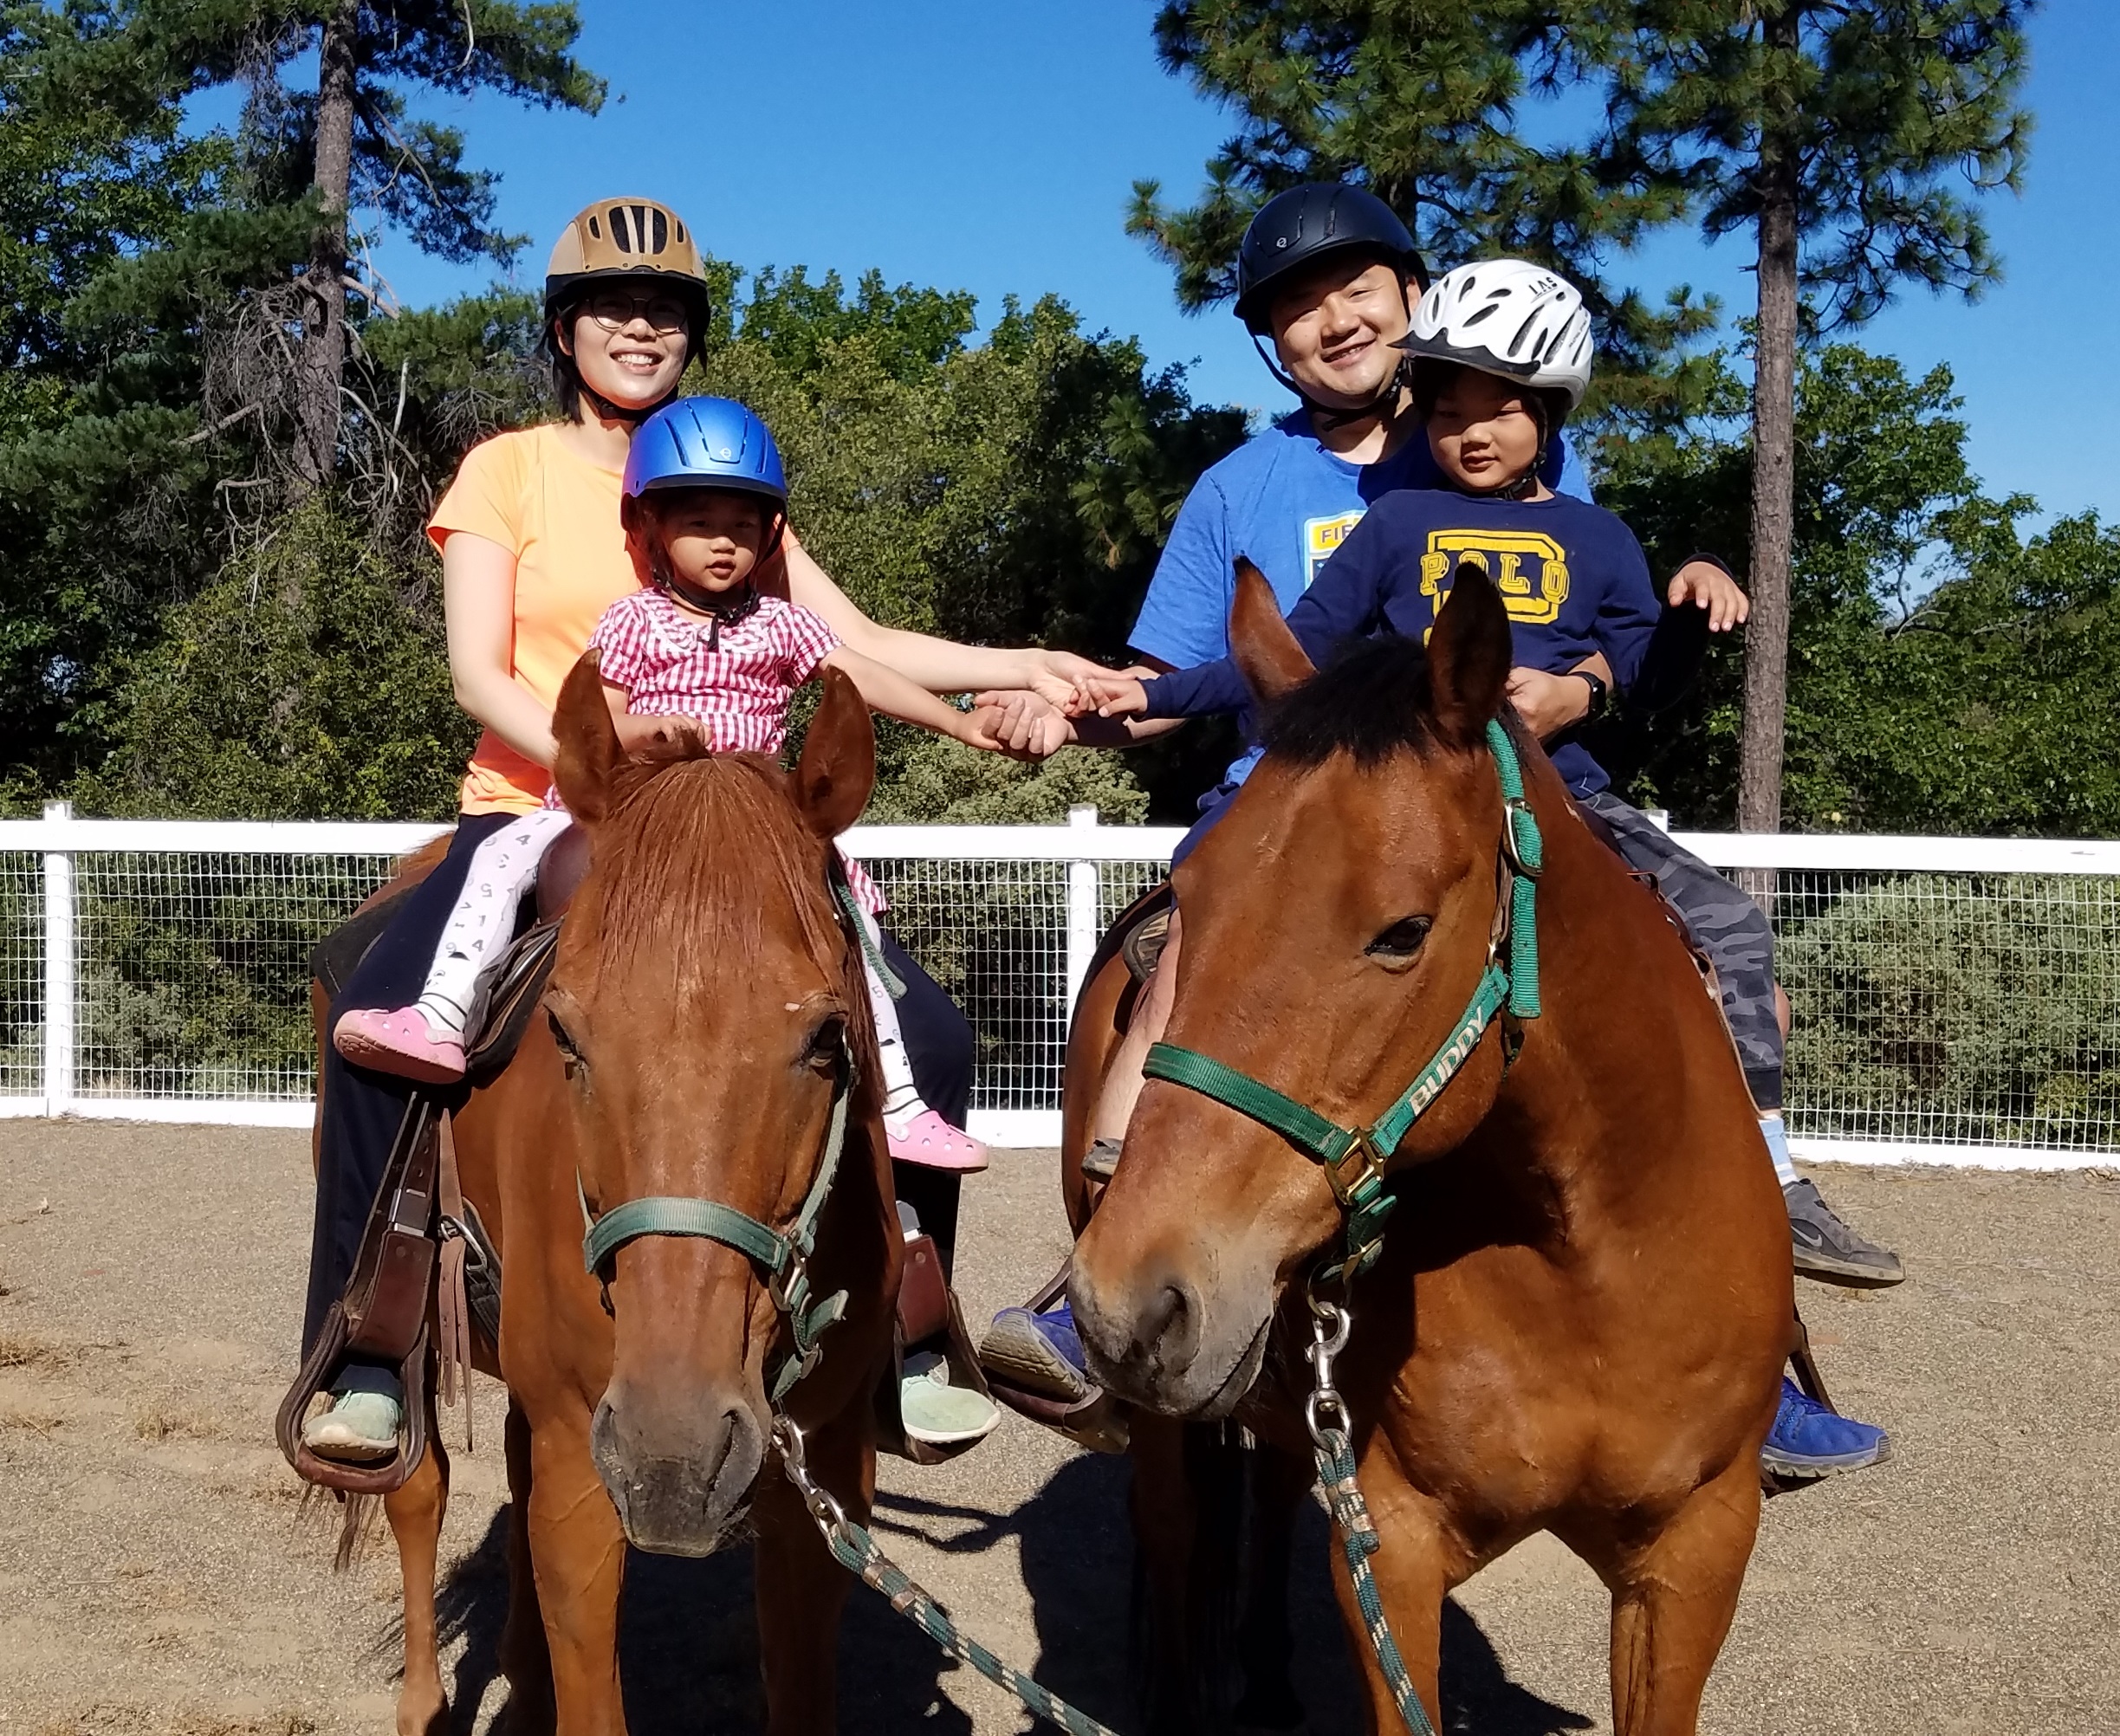 Enjoying the horses at the Dog & Pony Ranch